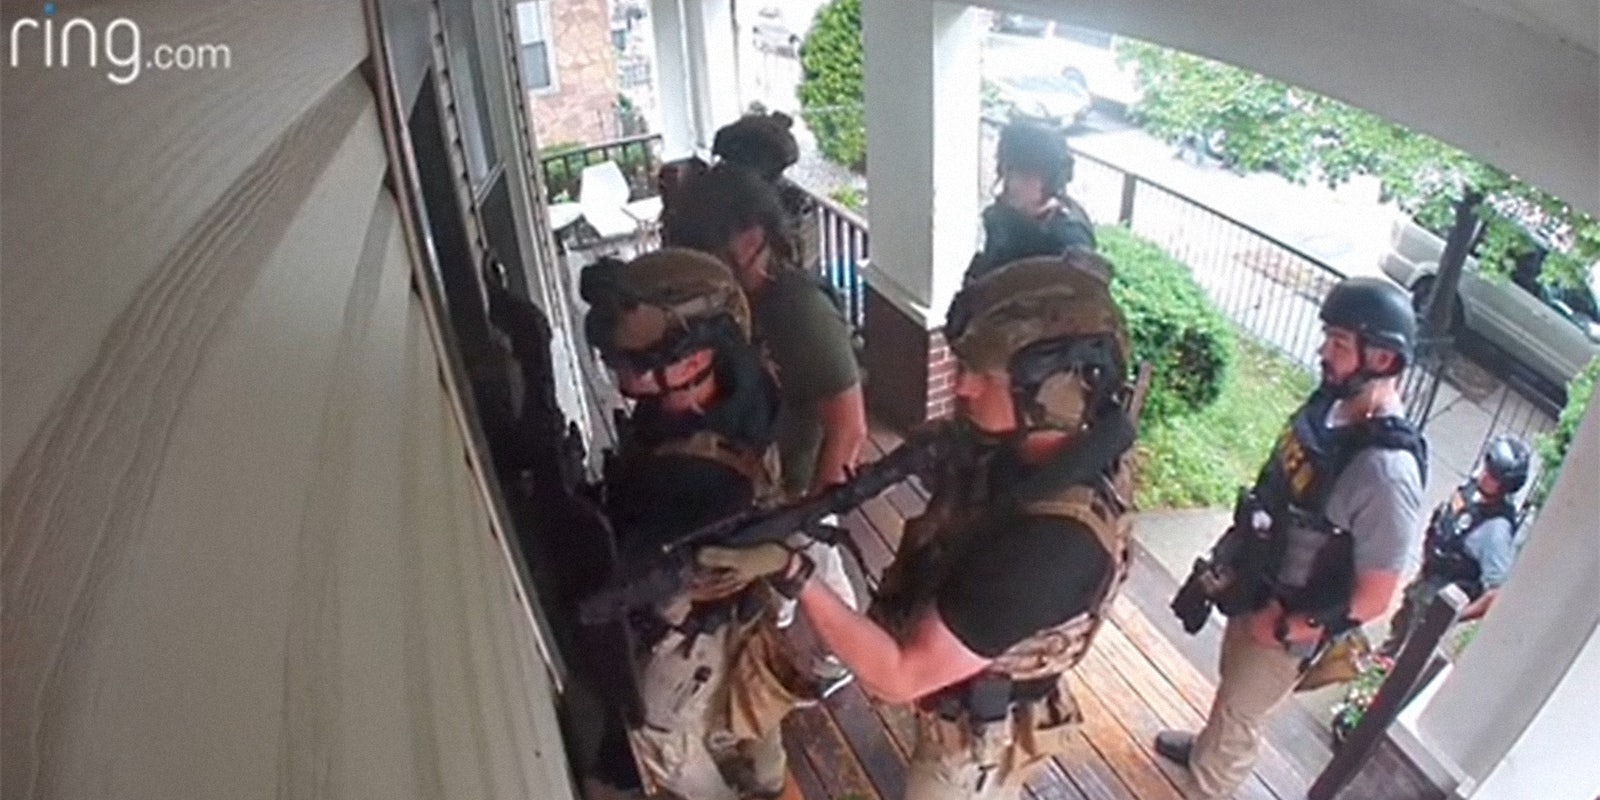 police in riot gear pointing shotguns through porch windows